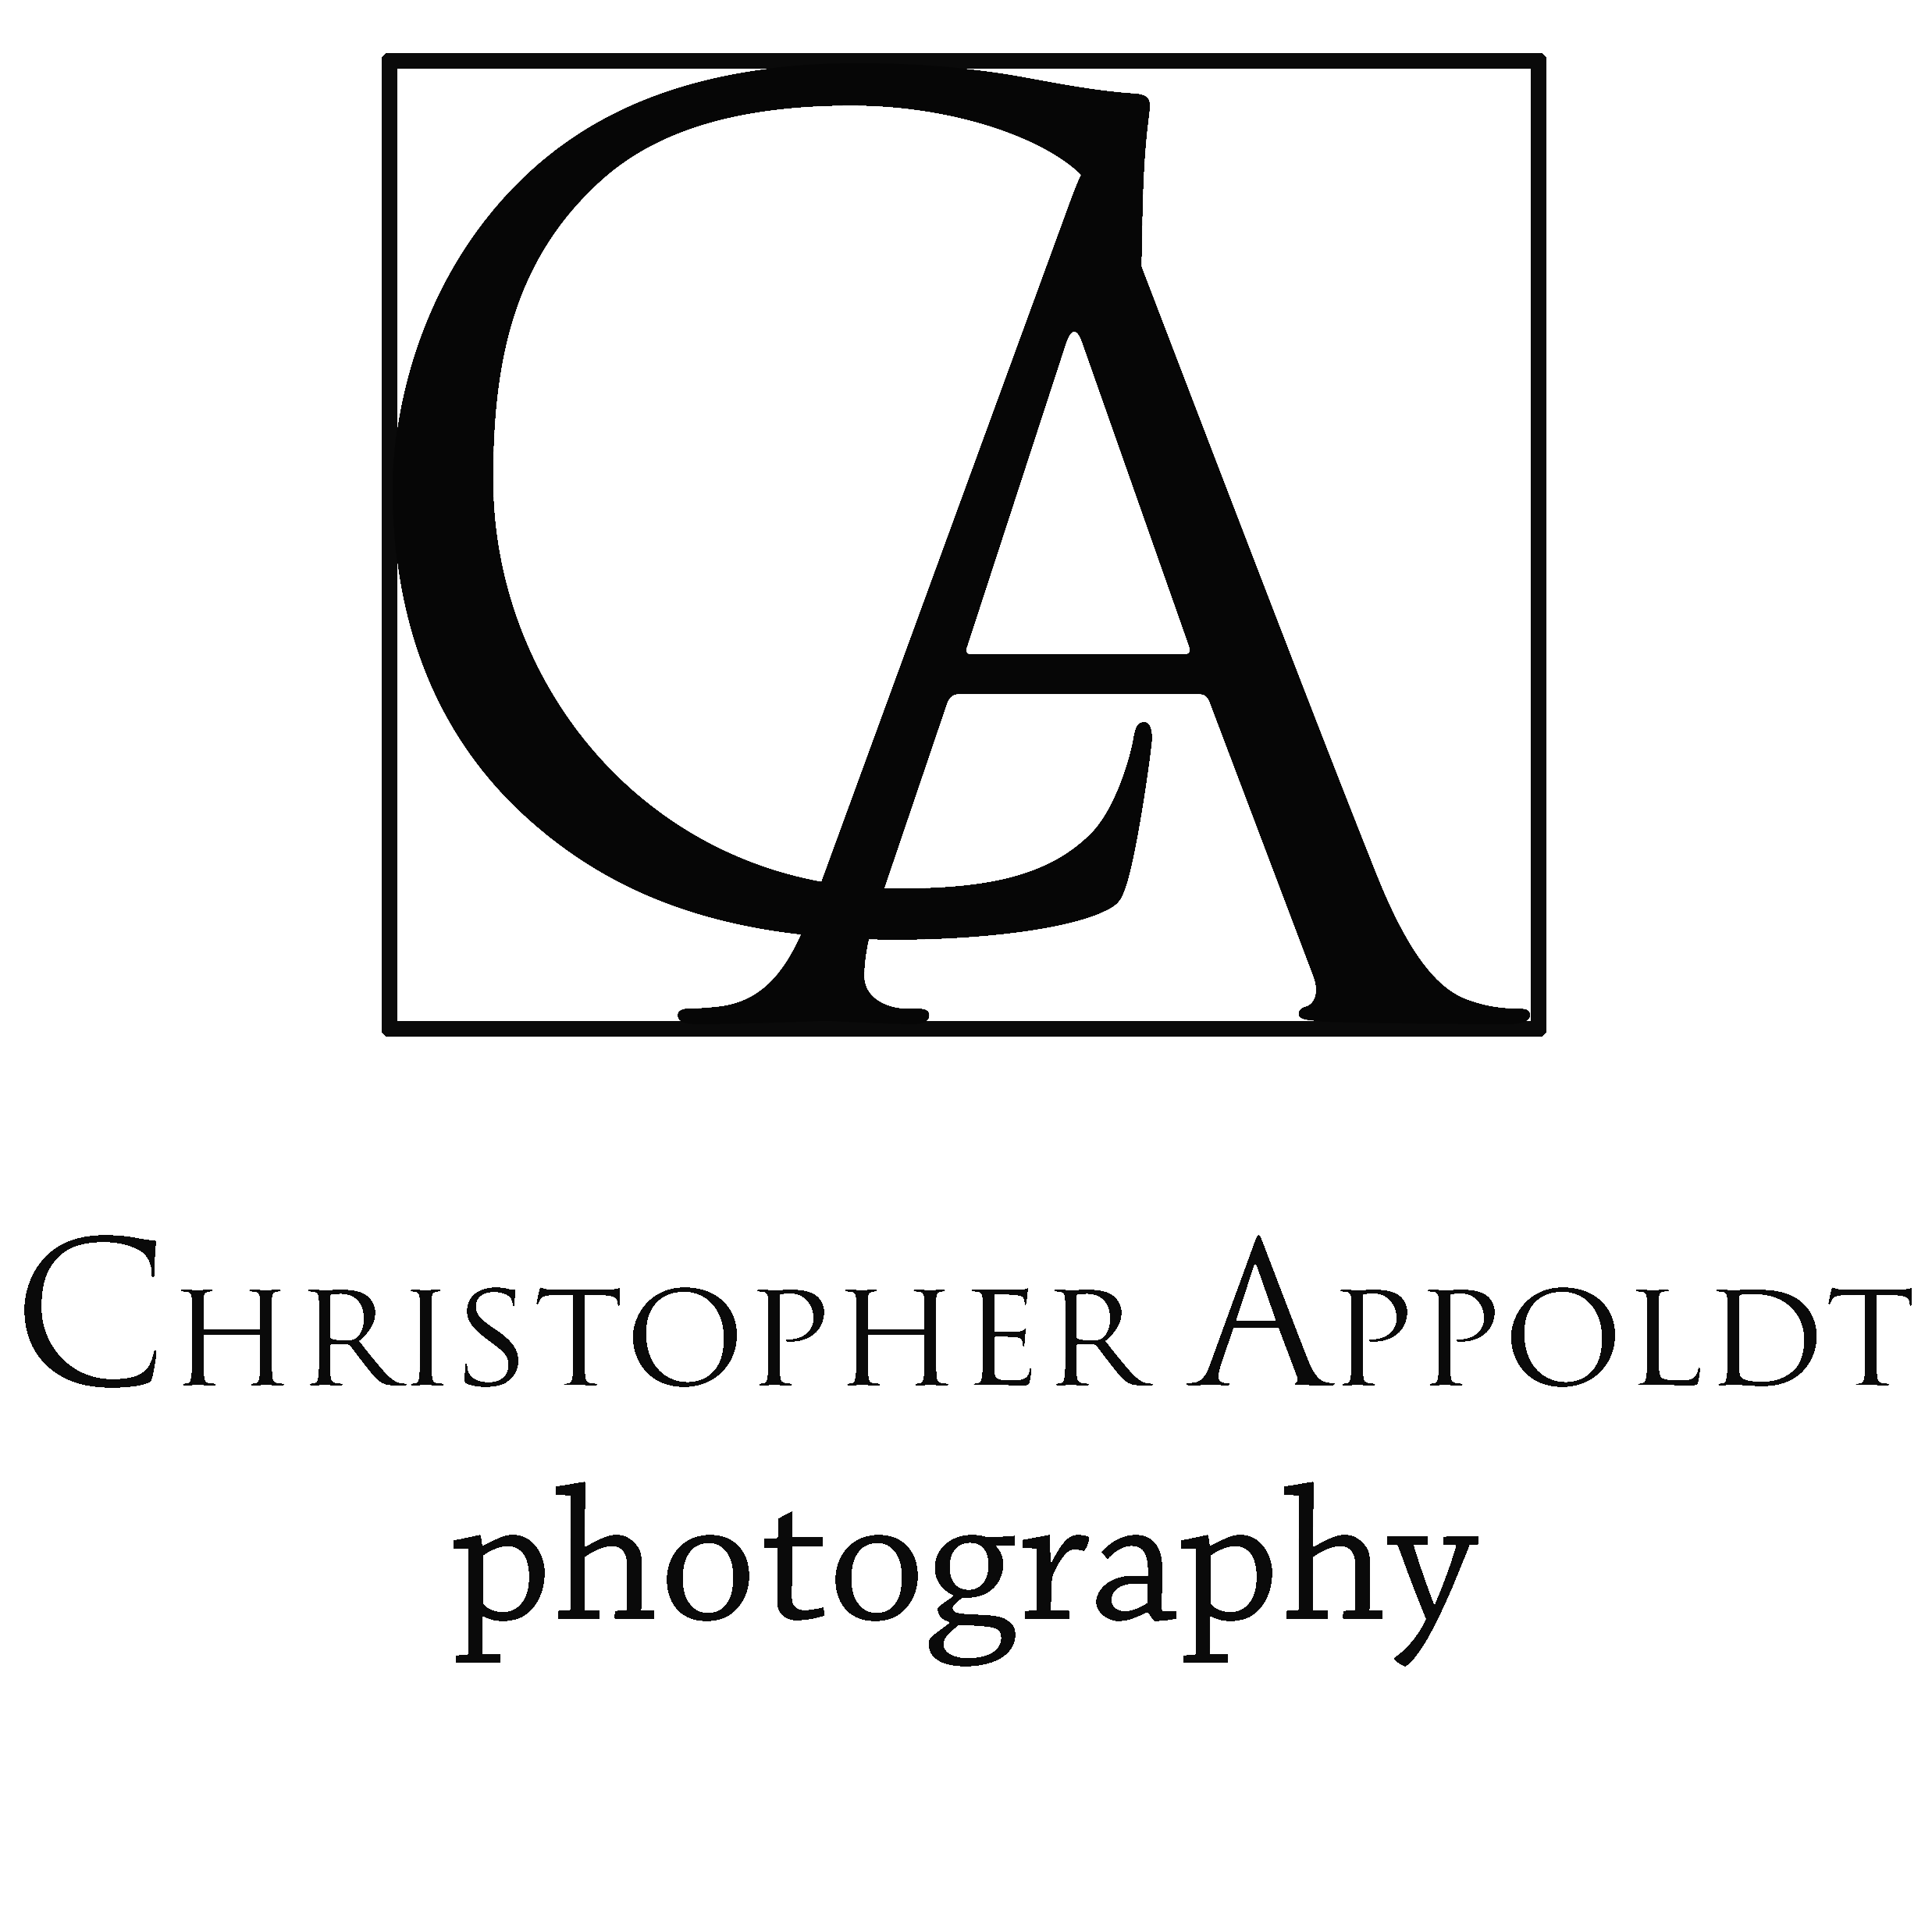 chris Appoldt Photography Clickable Logo